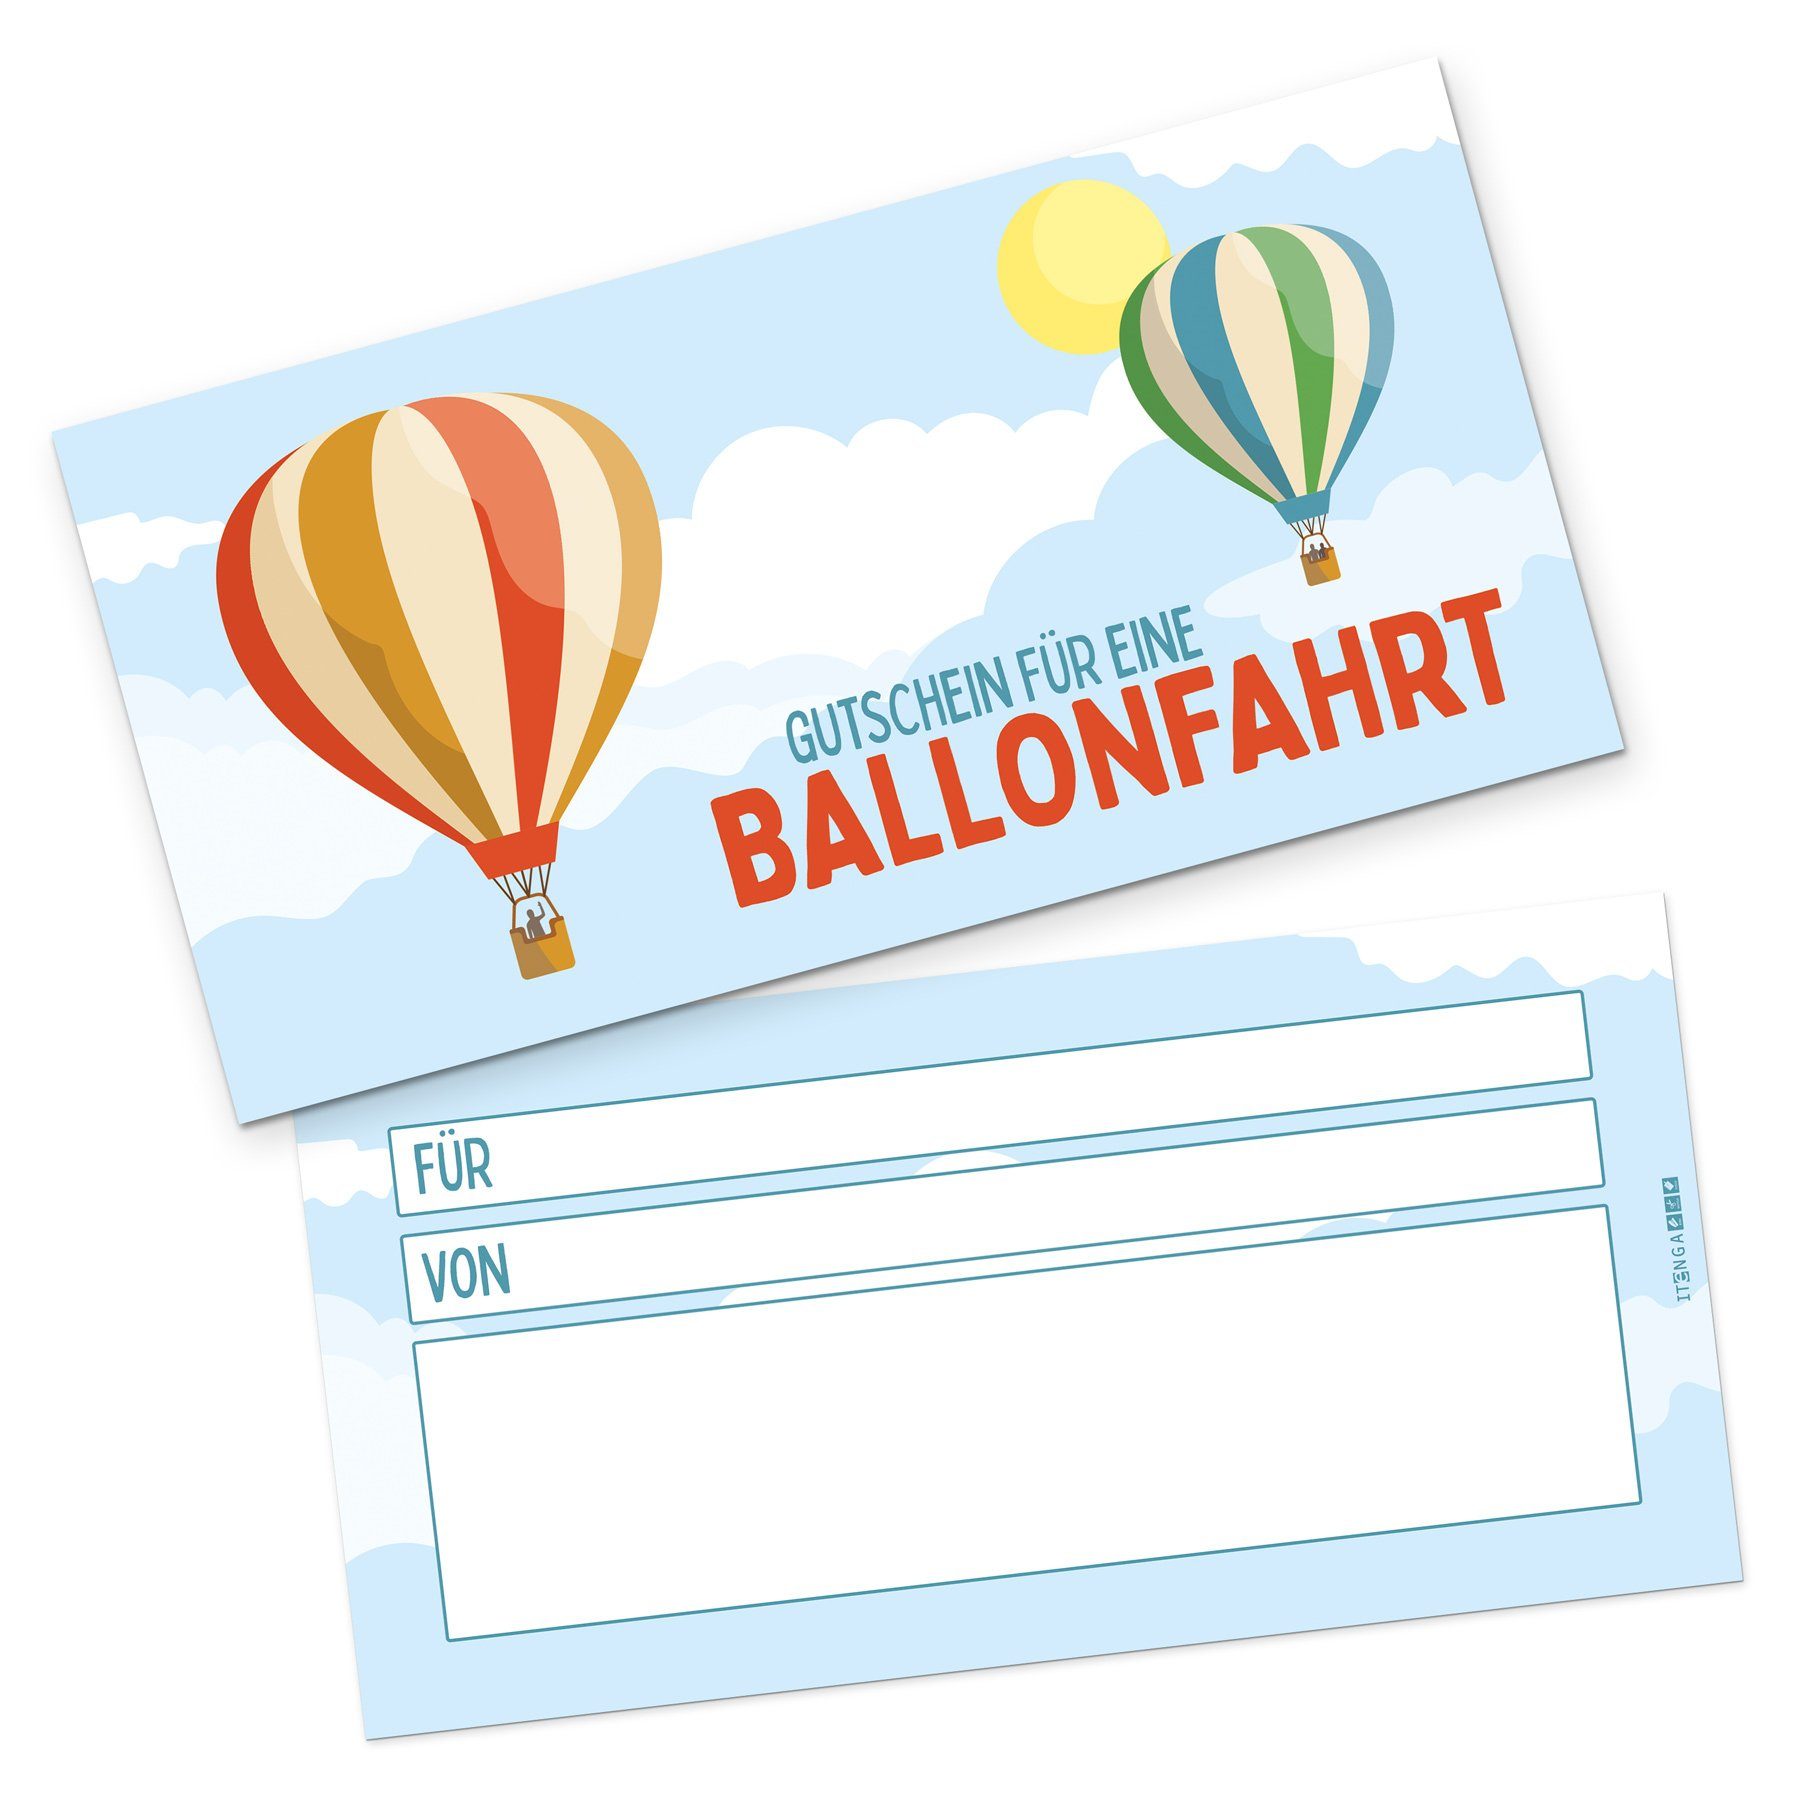 itenga Grußkarten itenga Geschenkgutschein Ballonfahrt - Gutschein zum Ausfüllen Karte